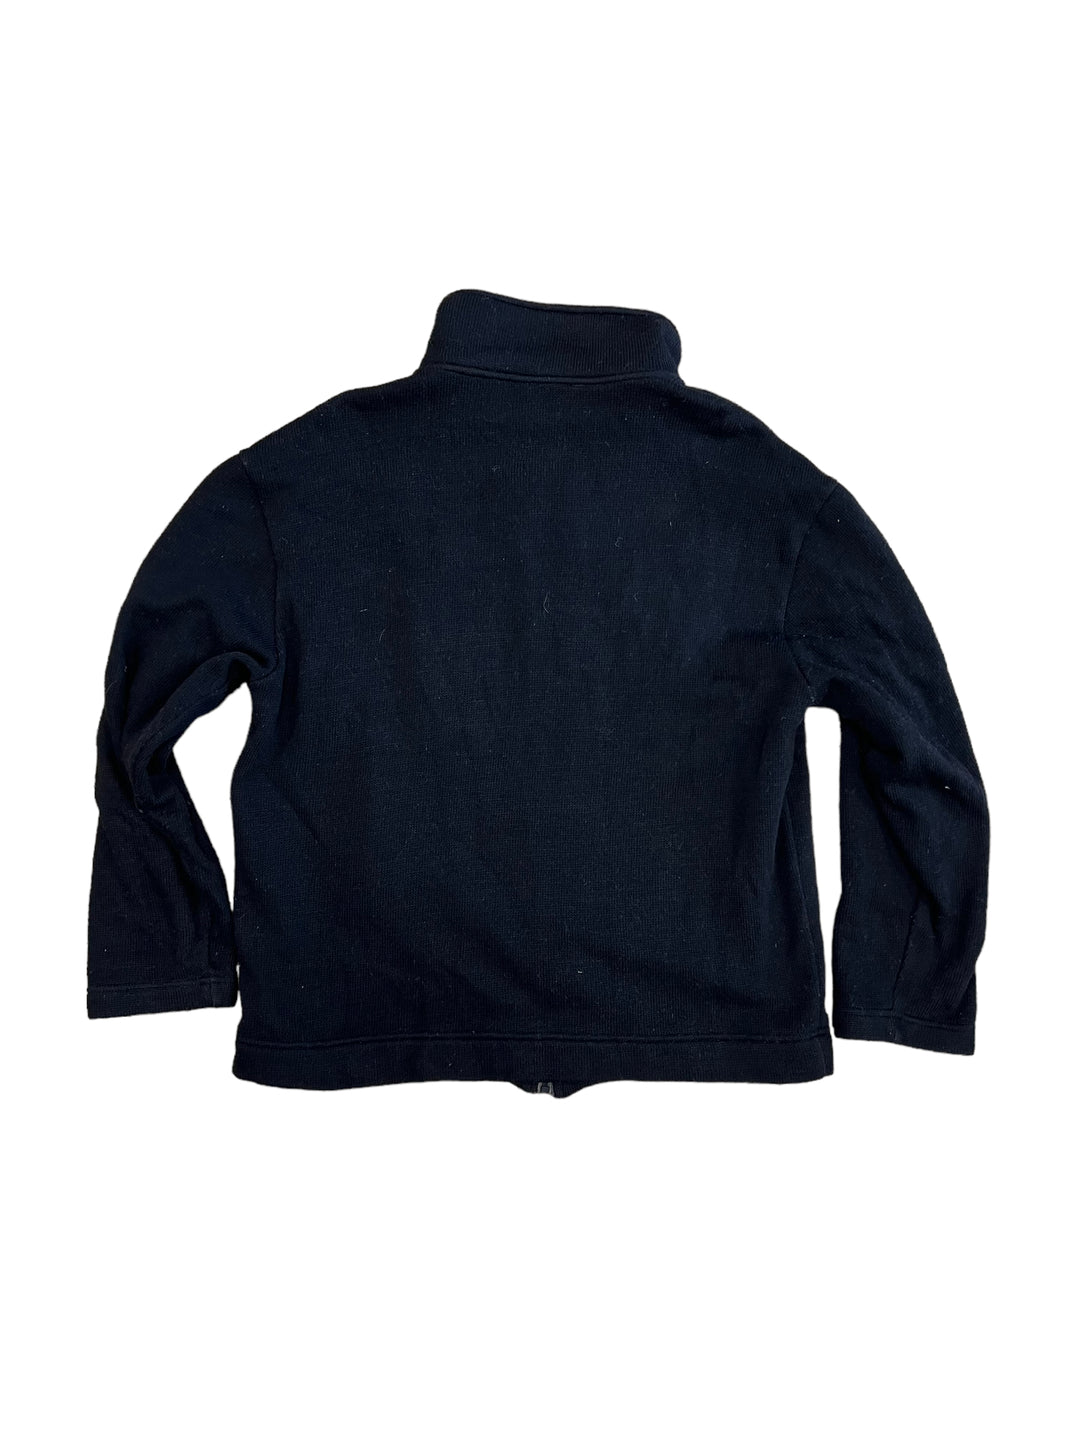 GAS Vintage Sweater Jacket Men’s Medium